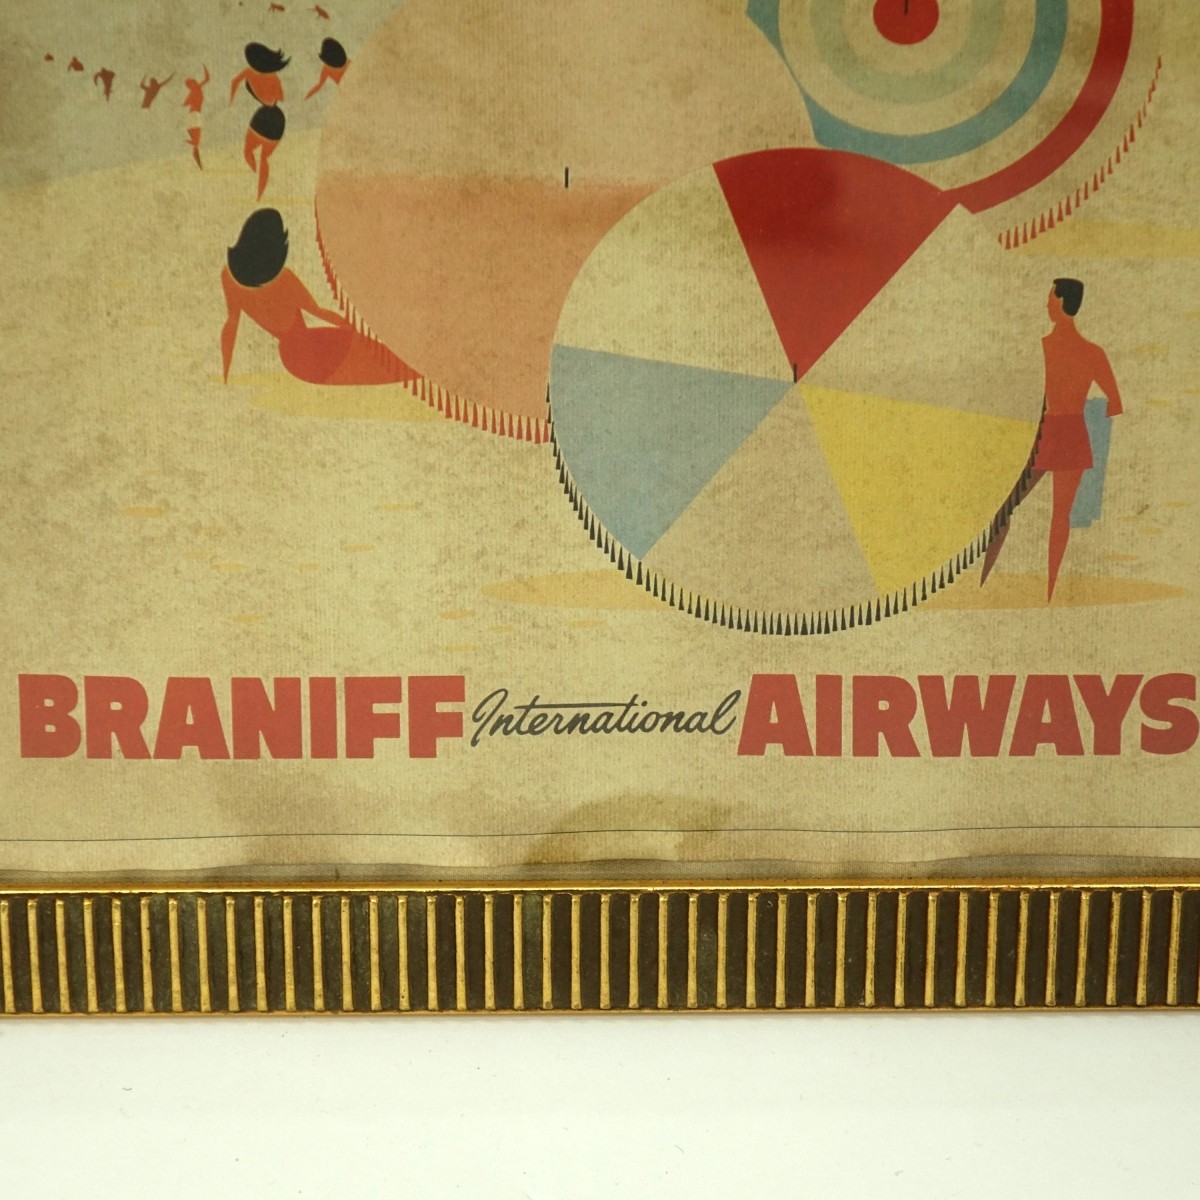 Two Braniff Airways Silk Screen Posters